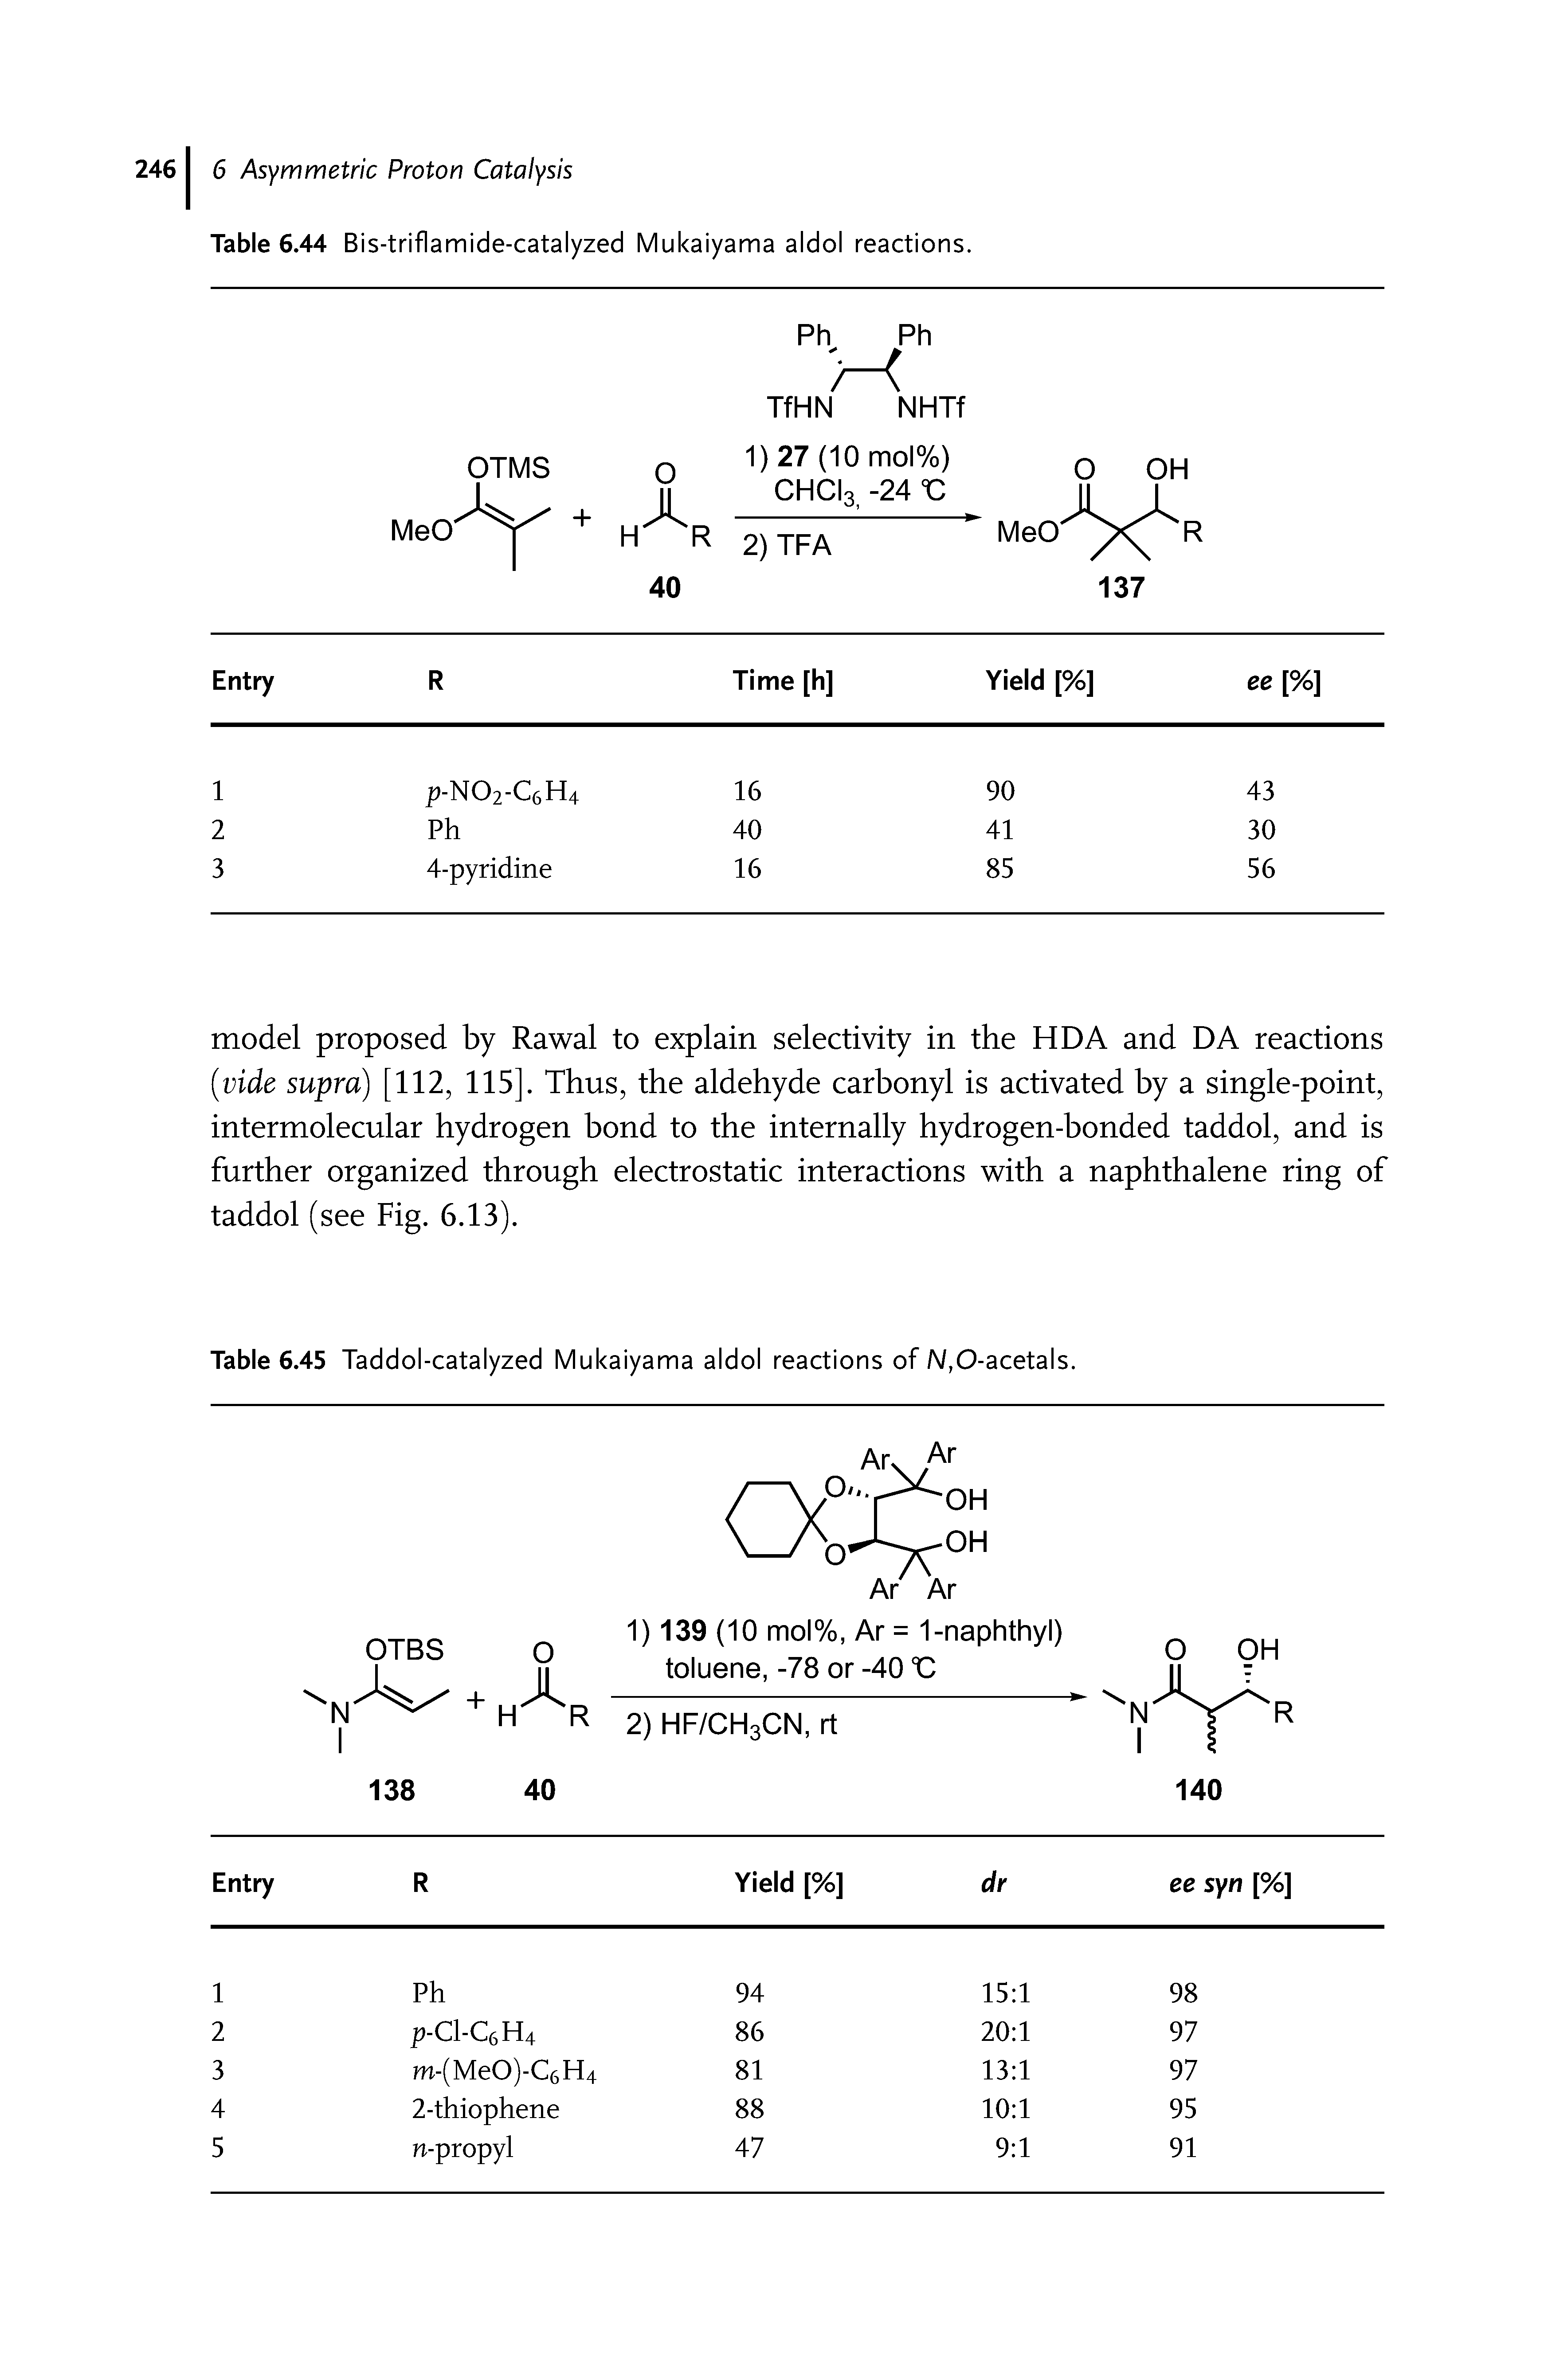 Table 6.45 Taddol-catalyzed Mukaiyama aldol reactions of N,Q-acetals.